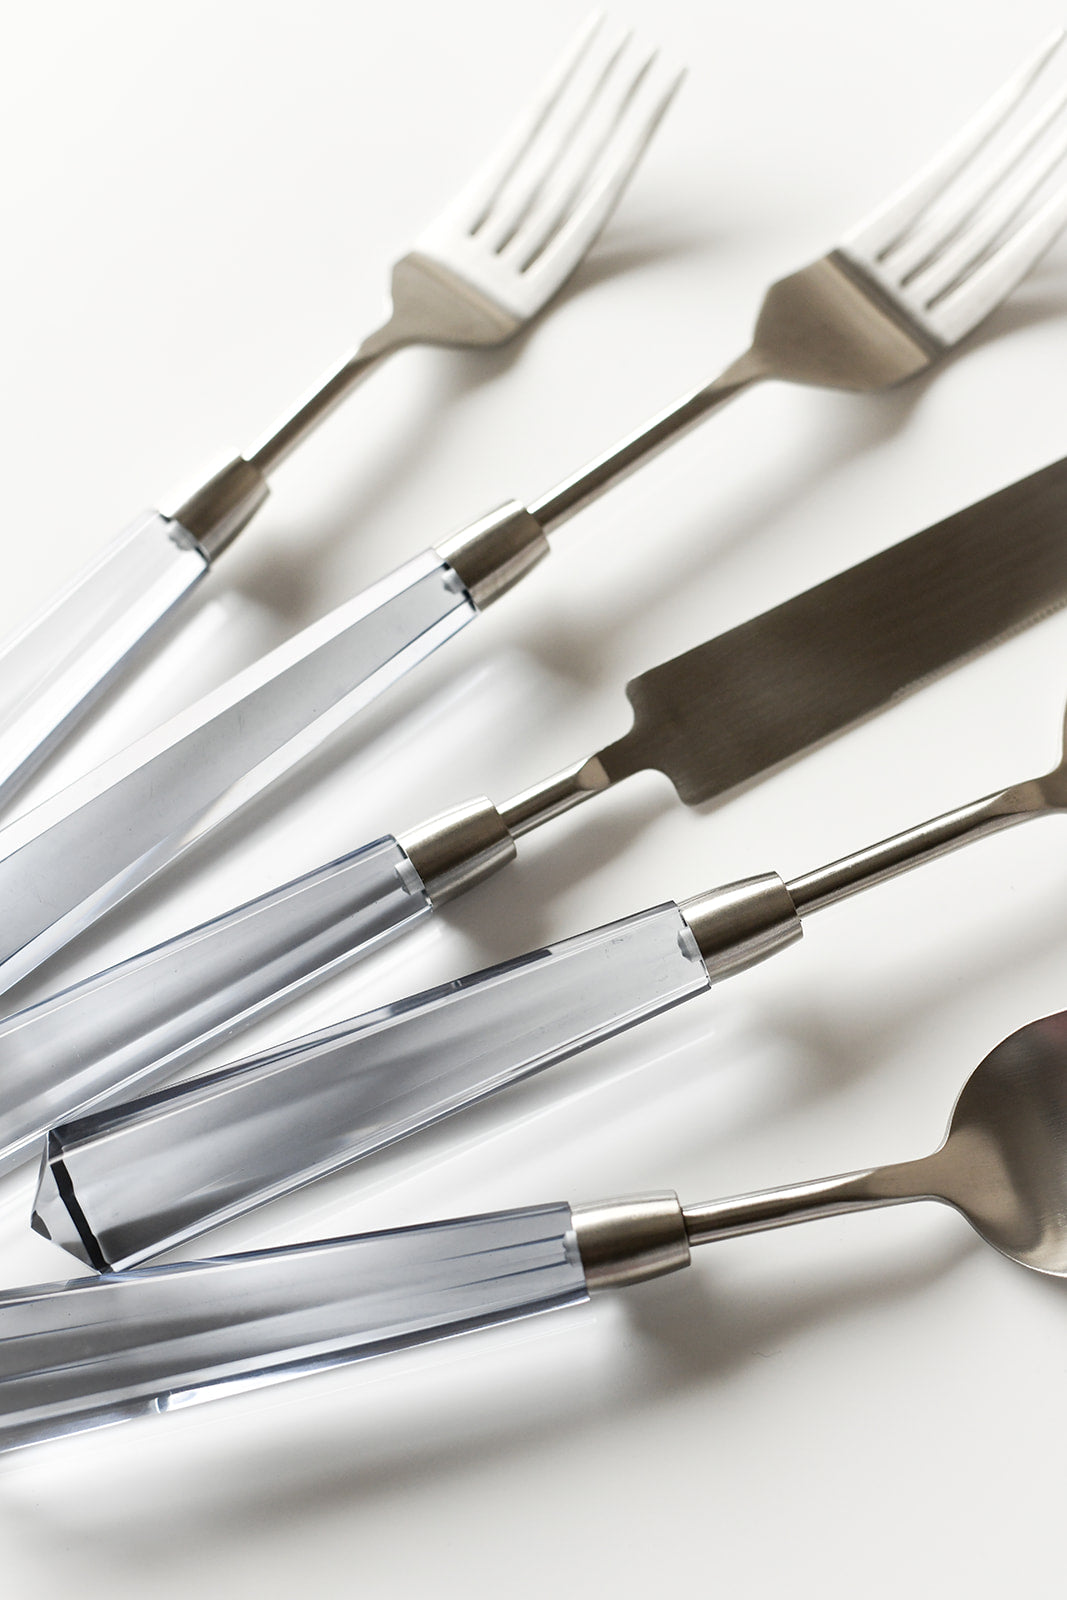 Acrylic Luxury Cutlery - Navy Greyish